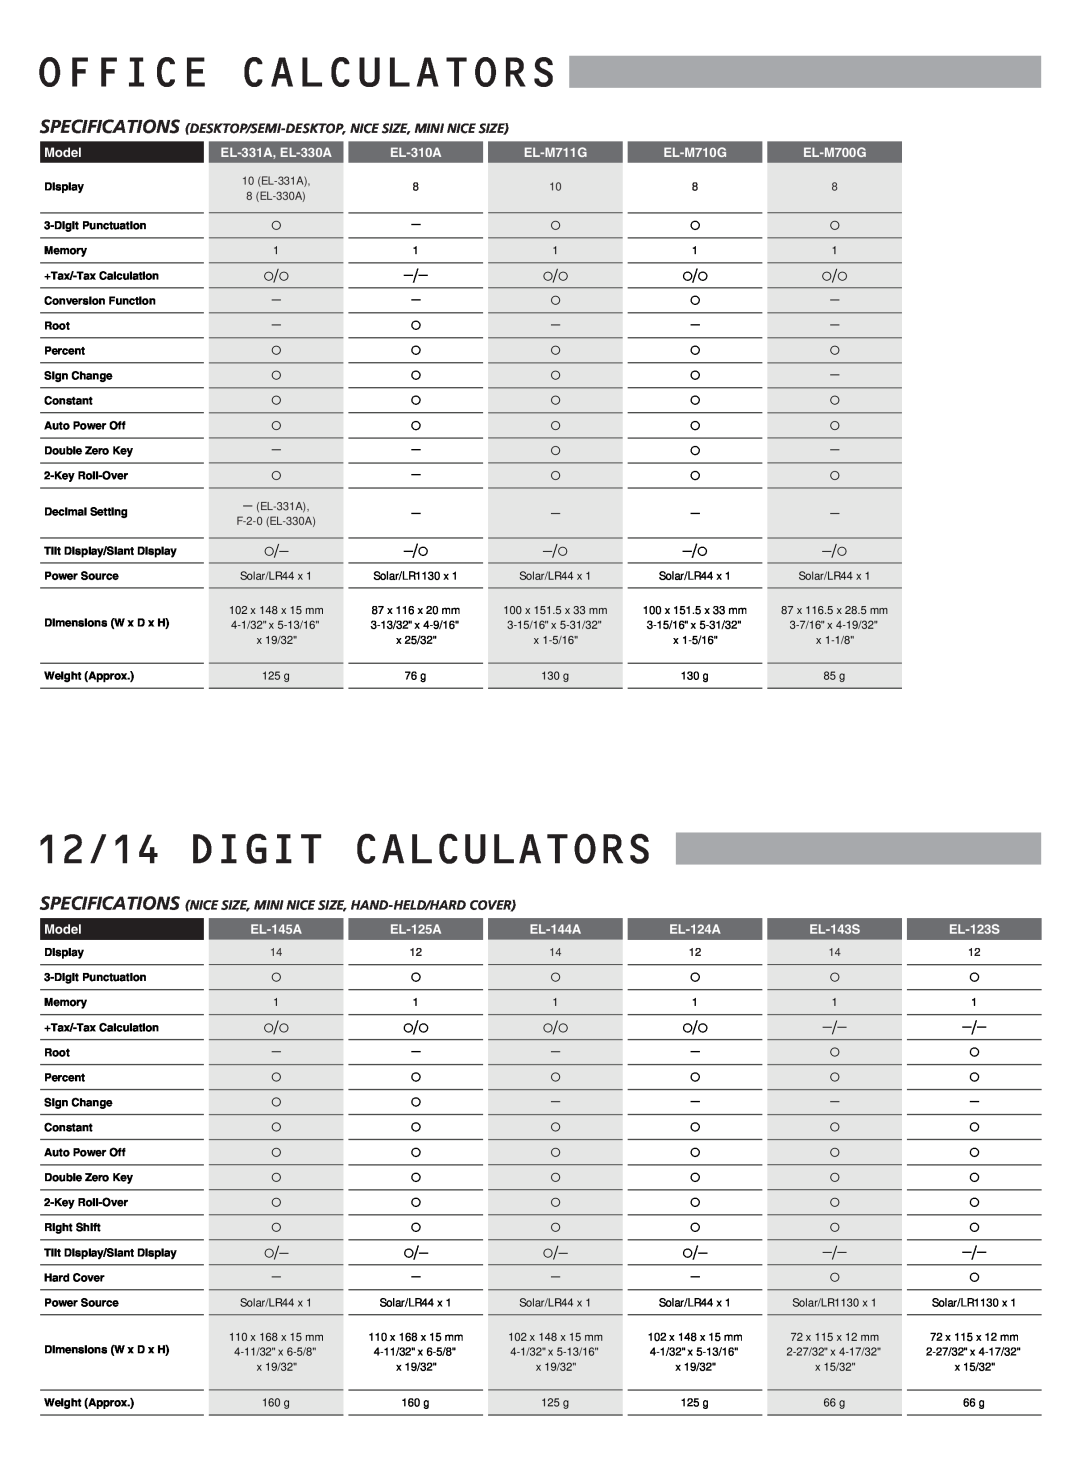 Sharp electronic calculator manual 12/14 DIGIT CALCULATORS, Office Calculators 